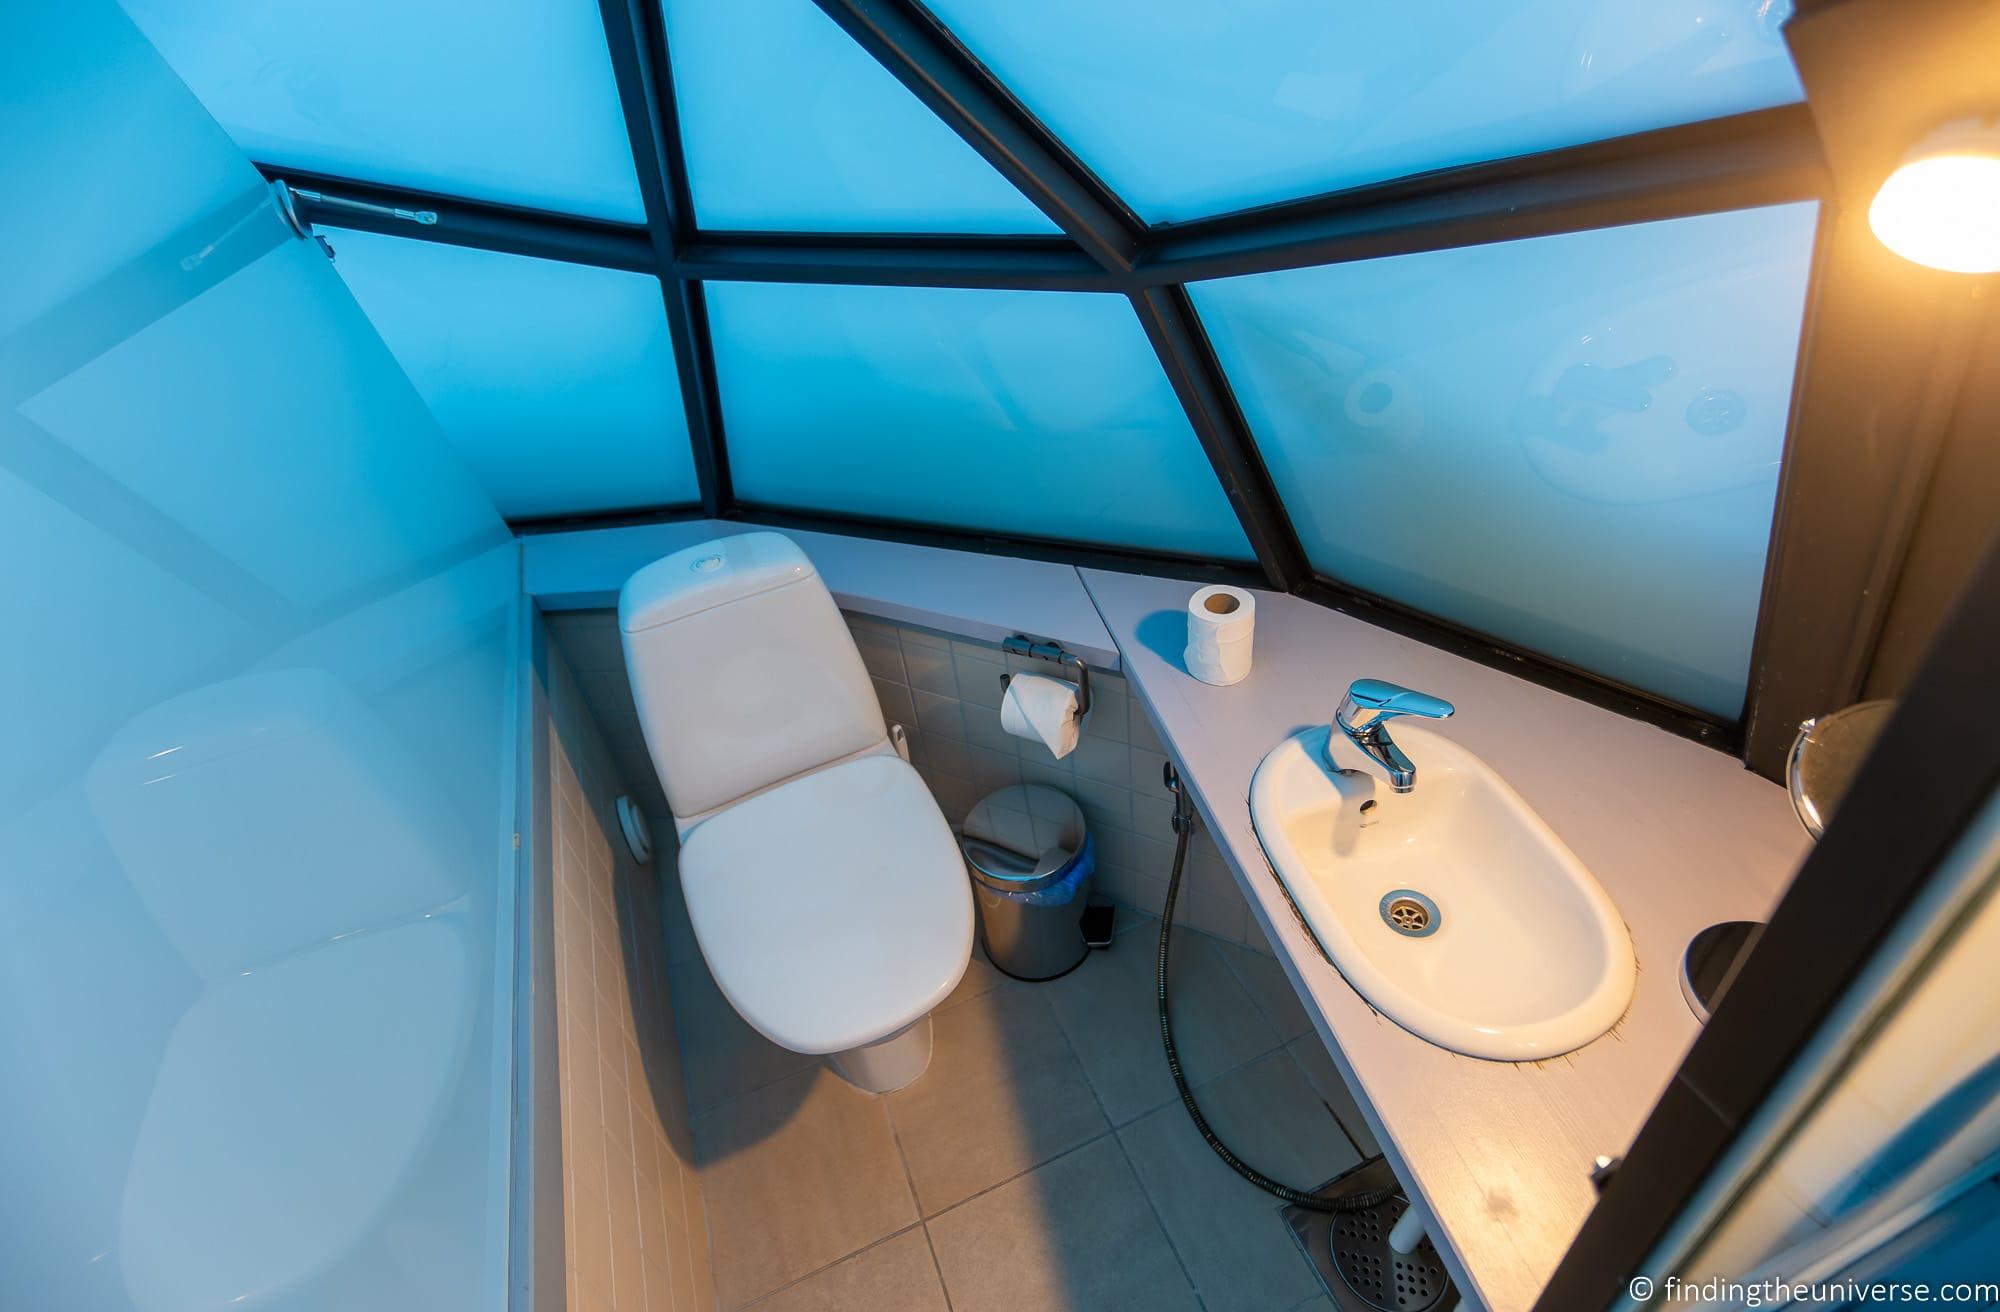 Kakslauttanen Arctic Resort - small glass igloo bathroom